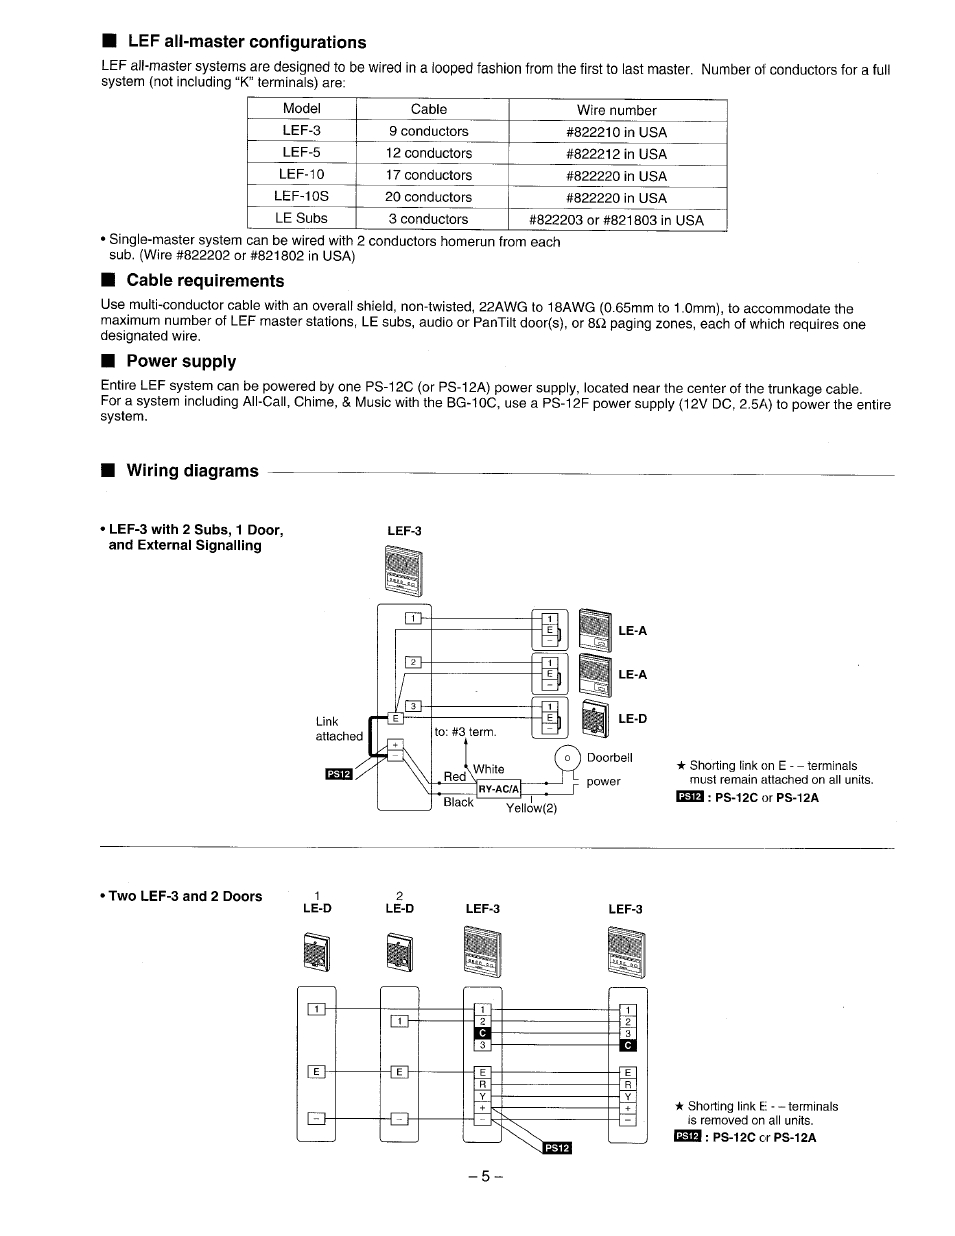 lef 5 wiring diagram wiring diagram home aiphone lef 5 wiring diagram